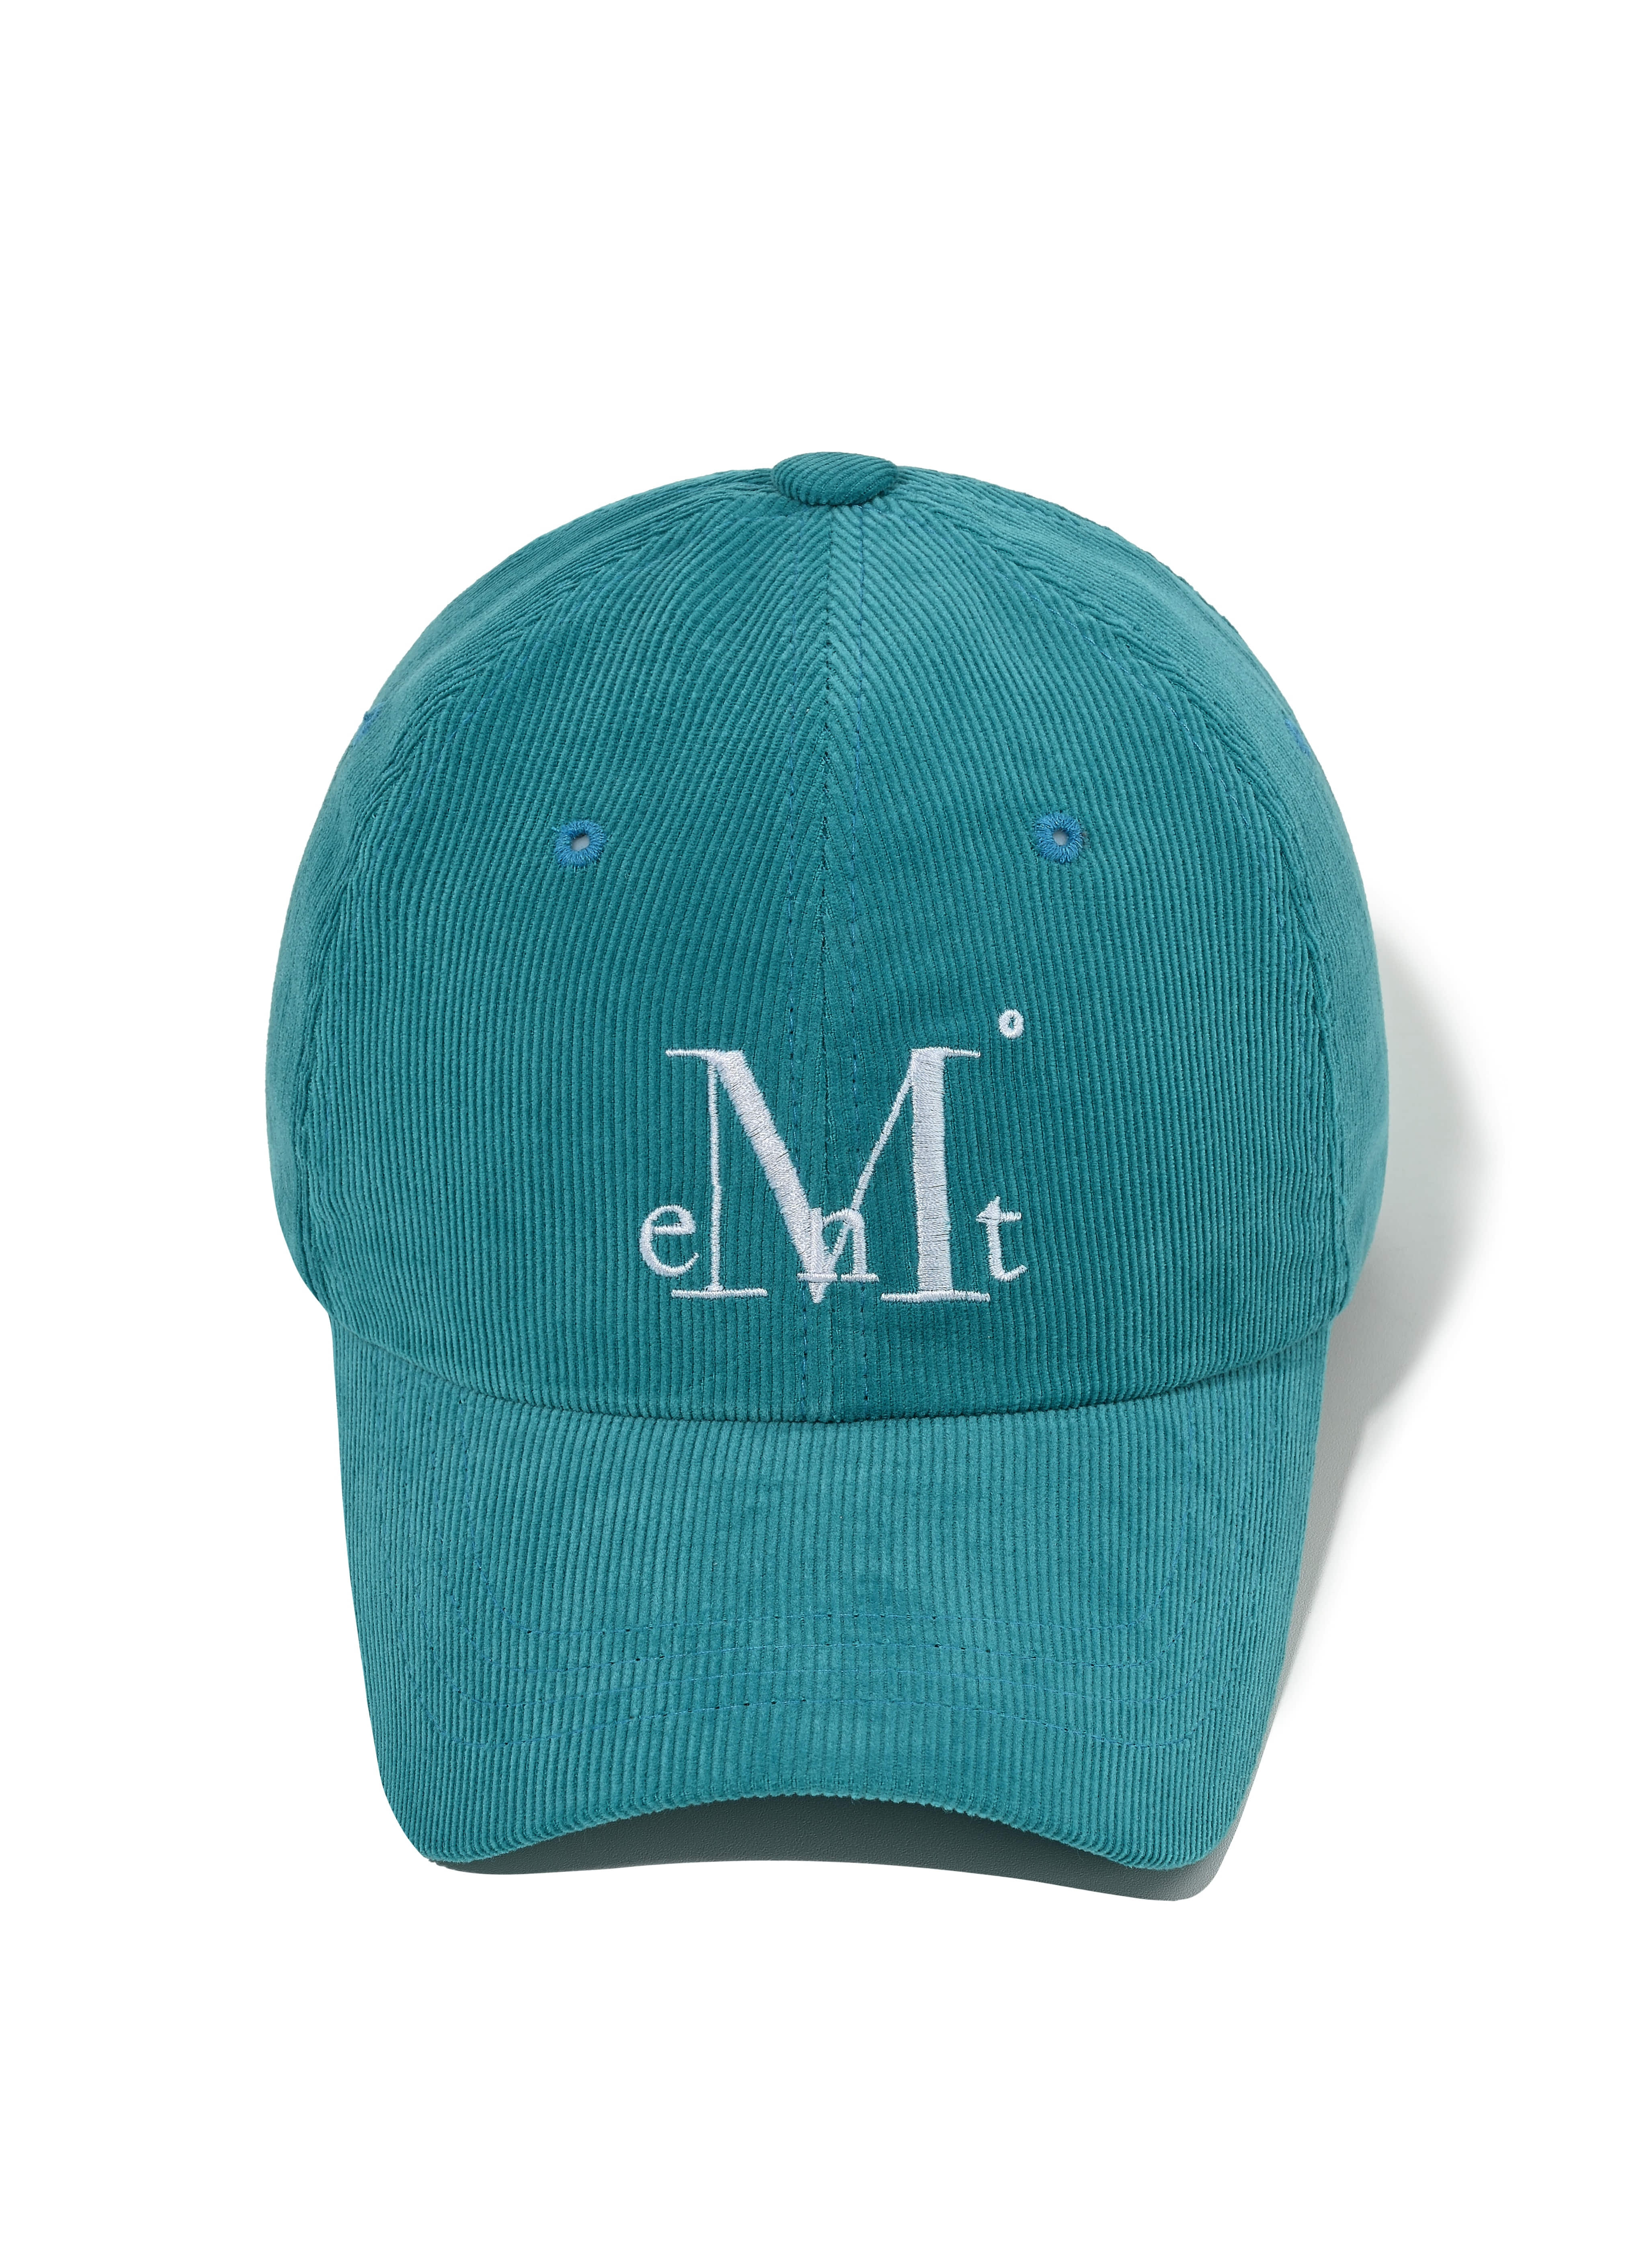 MUCENT BALL CAP - 무센트 볼캡 (Corduroy blue green)